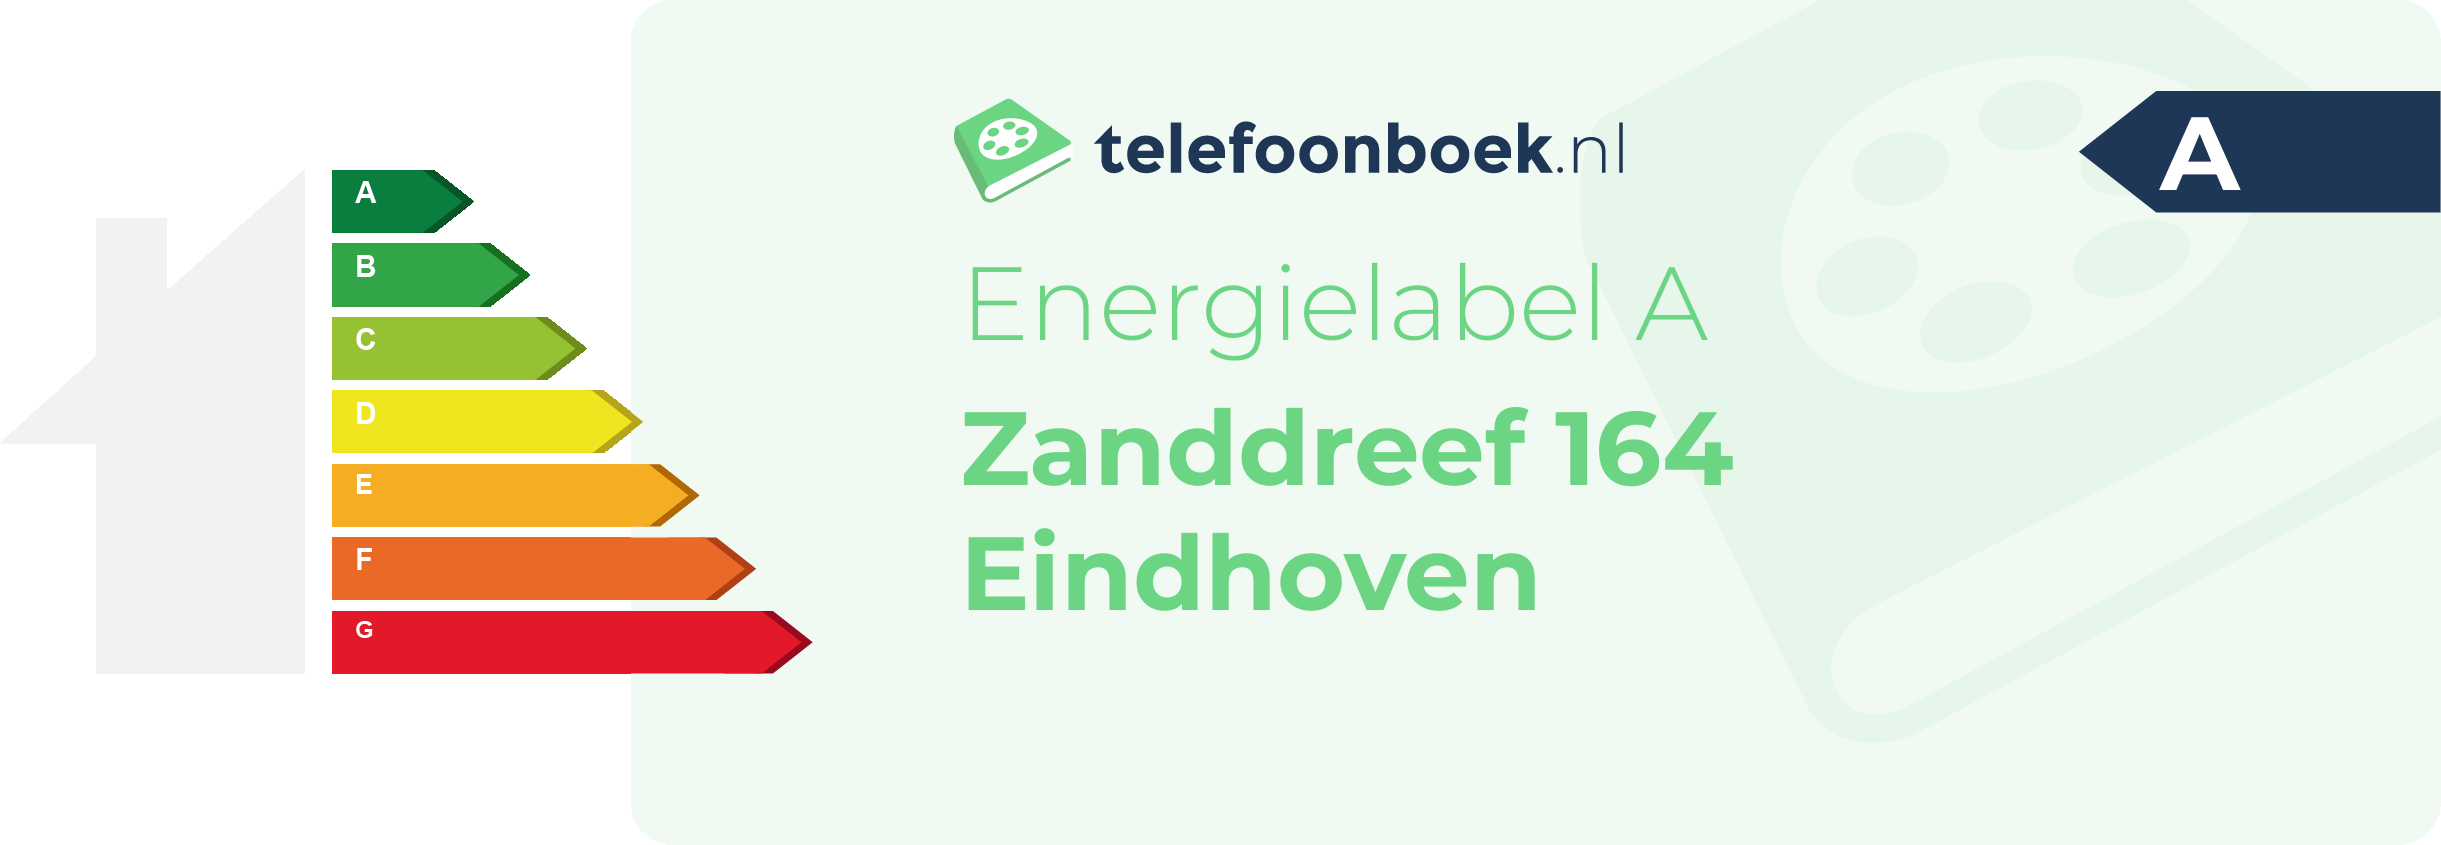 Energielabel Zanddreef 164 Eindhoven